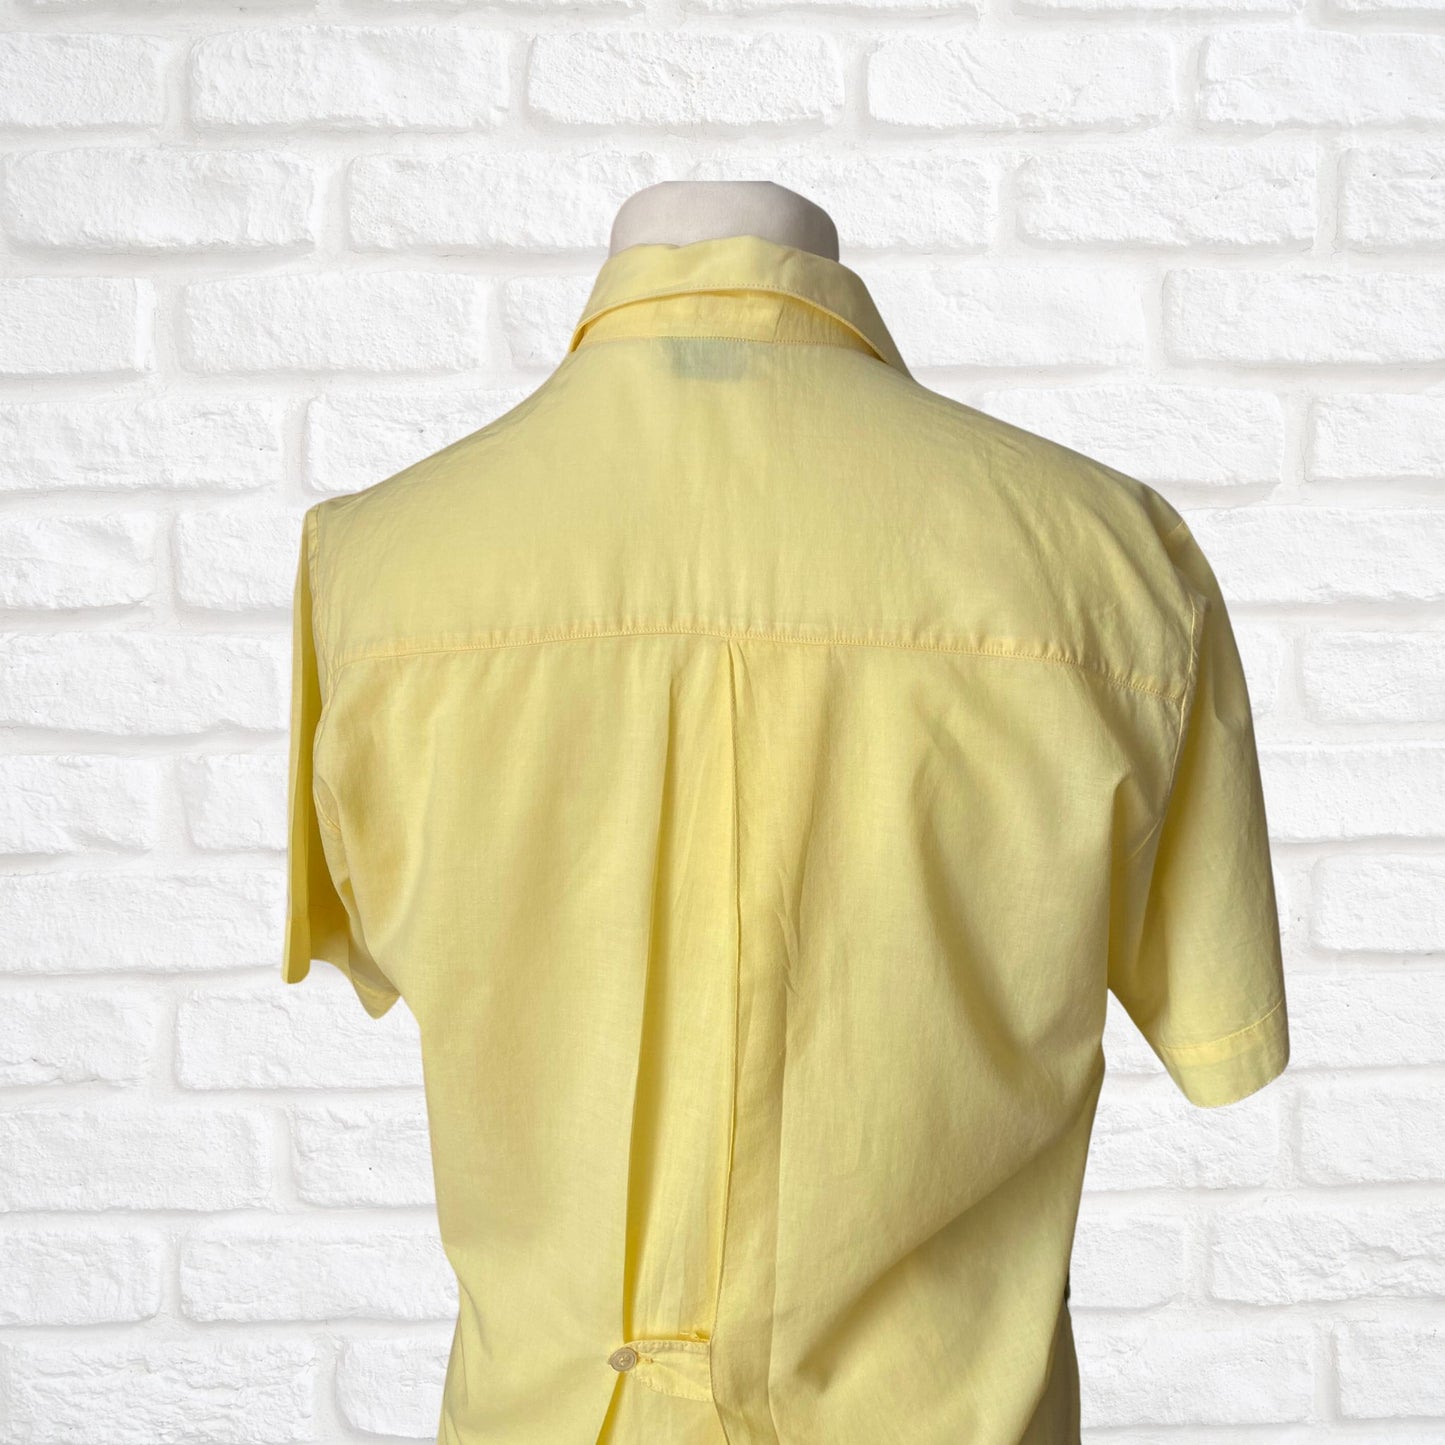 80s shirt sleeves yellow cotton shirt . Approx U.K. size  12-14